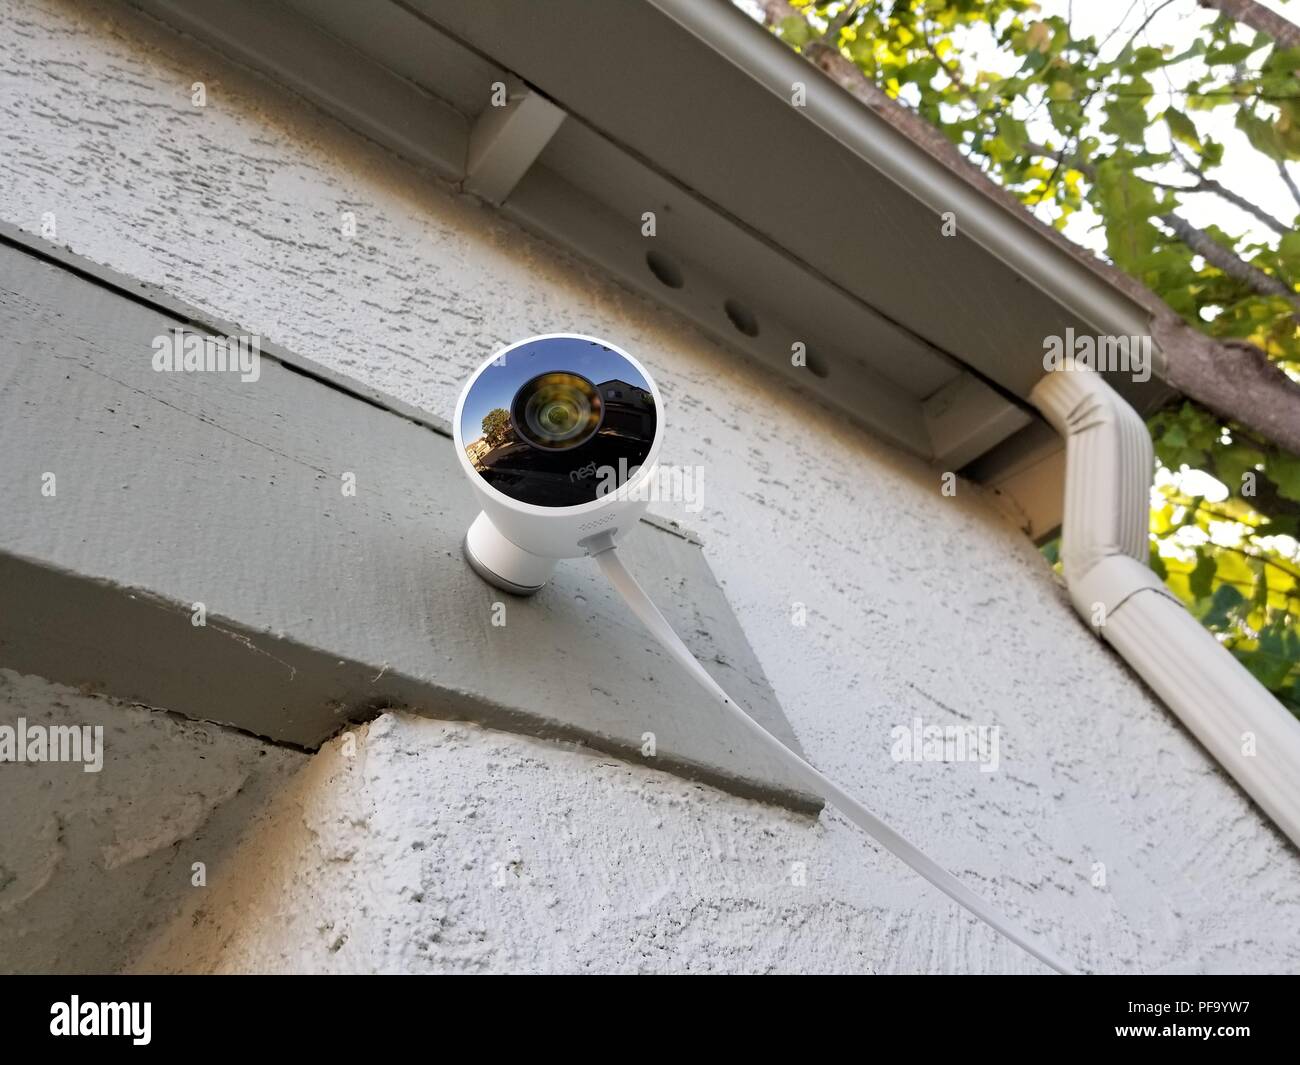 nest garage camera